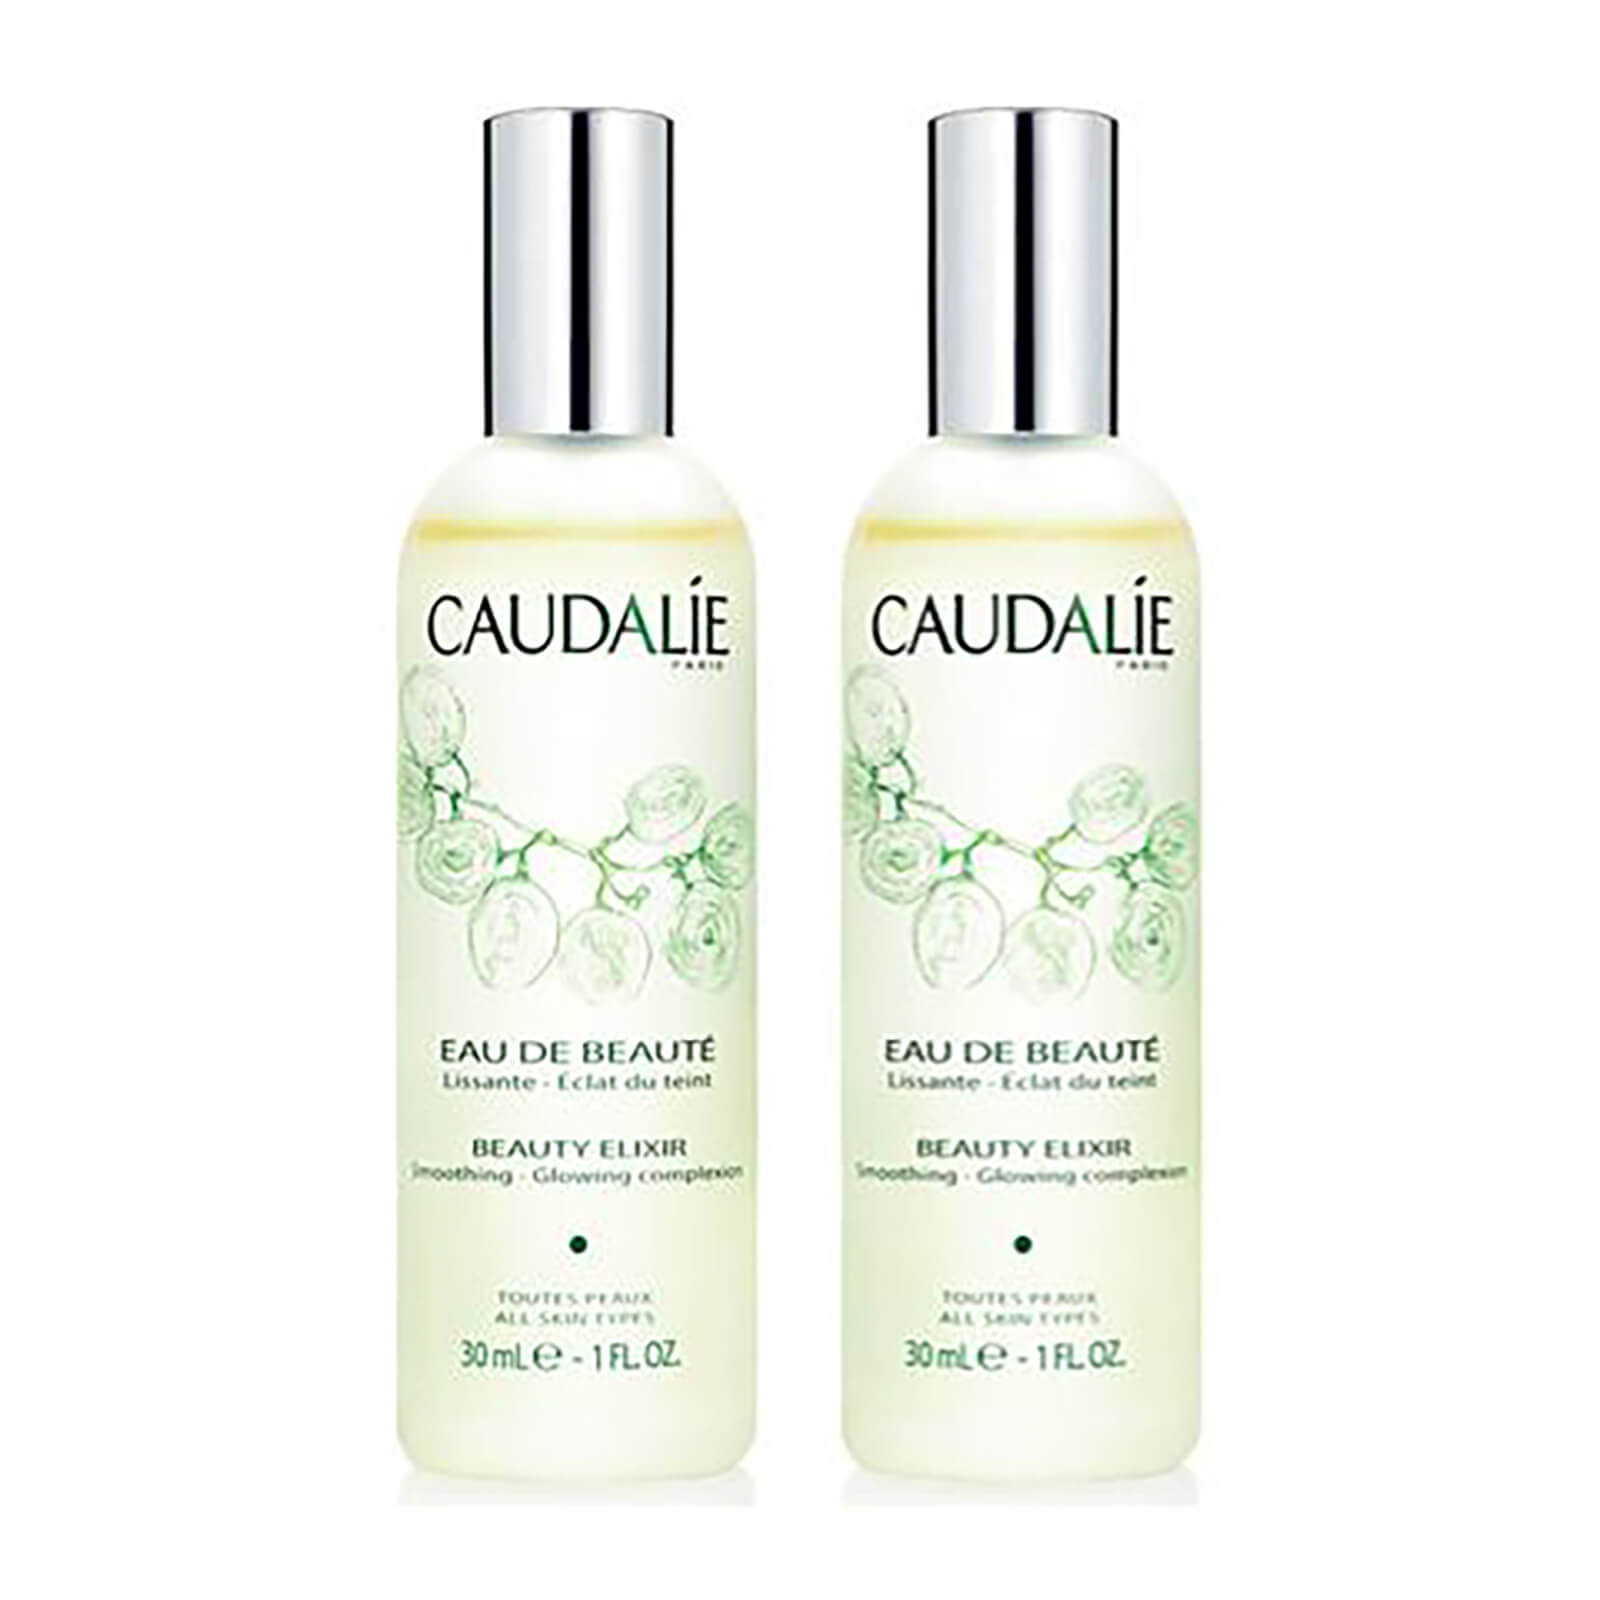 Caudalie Beauty Elixir Duo 30ml (Worth PS24)